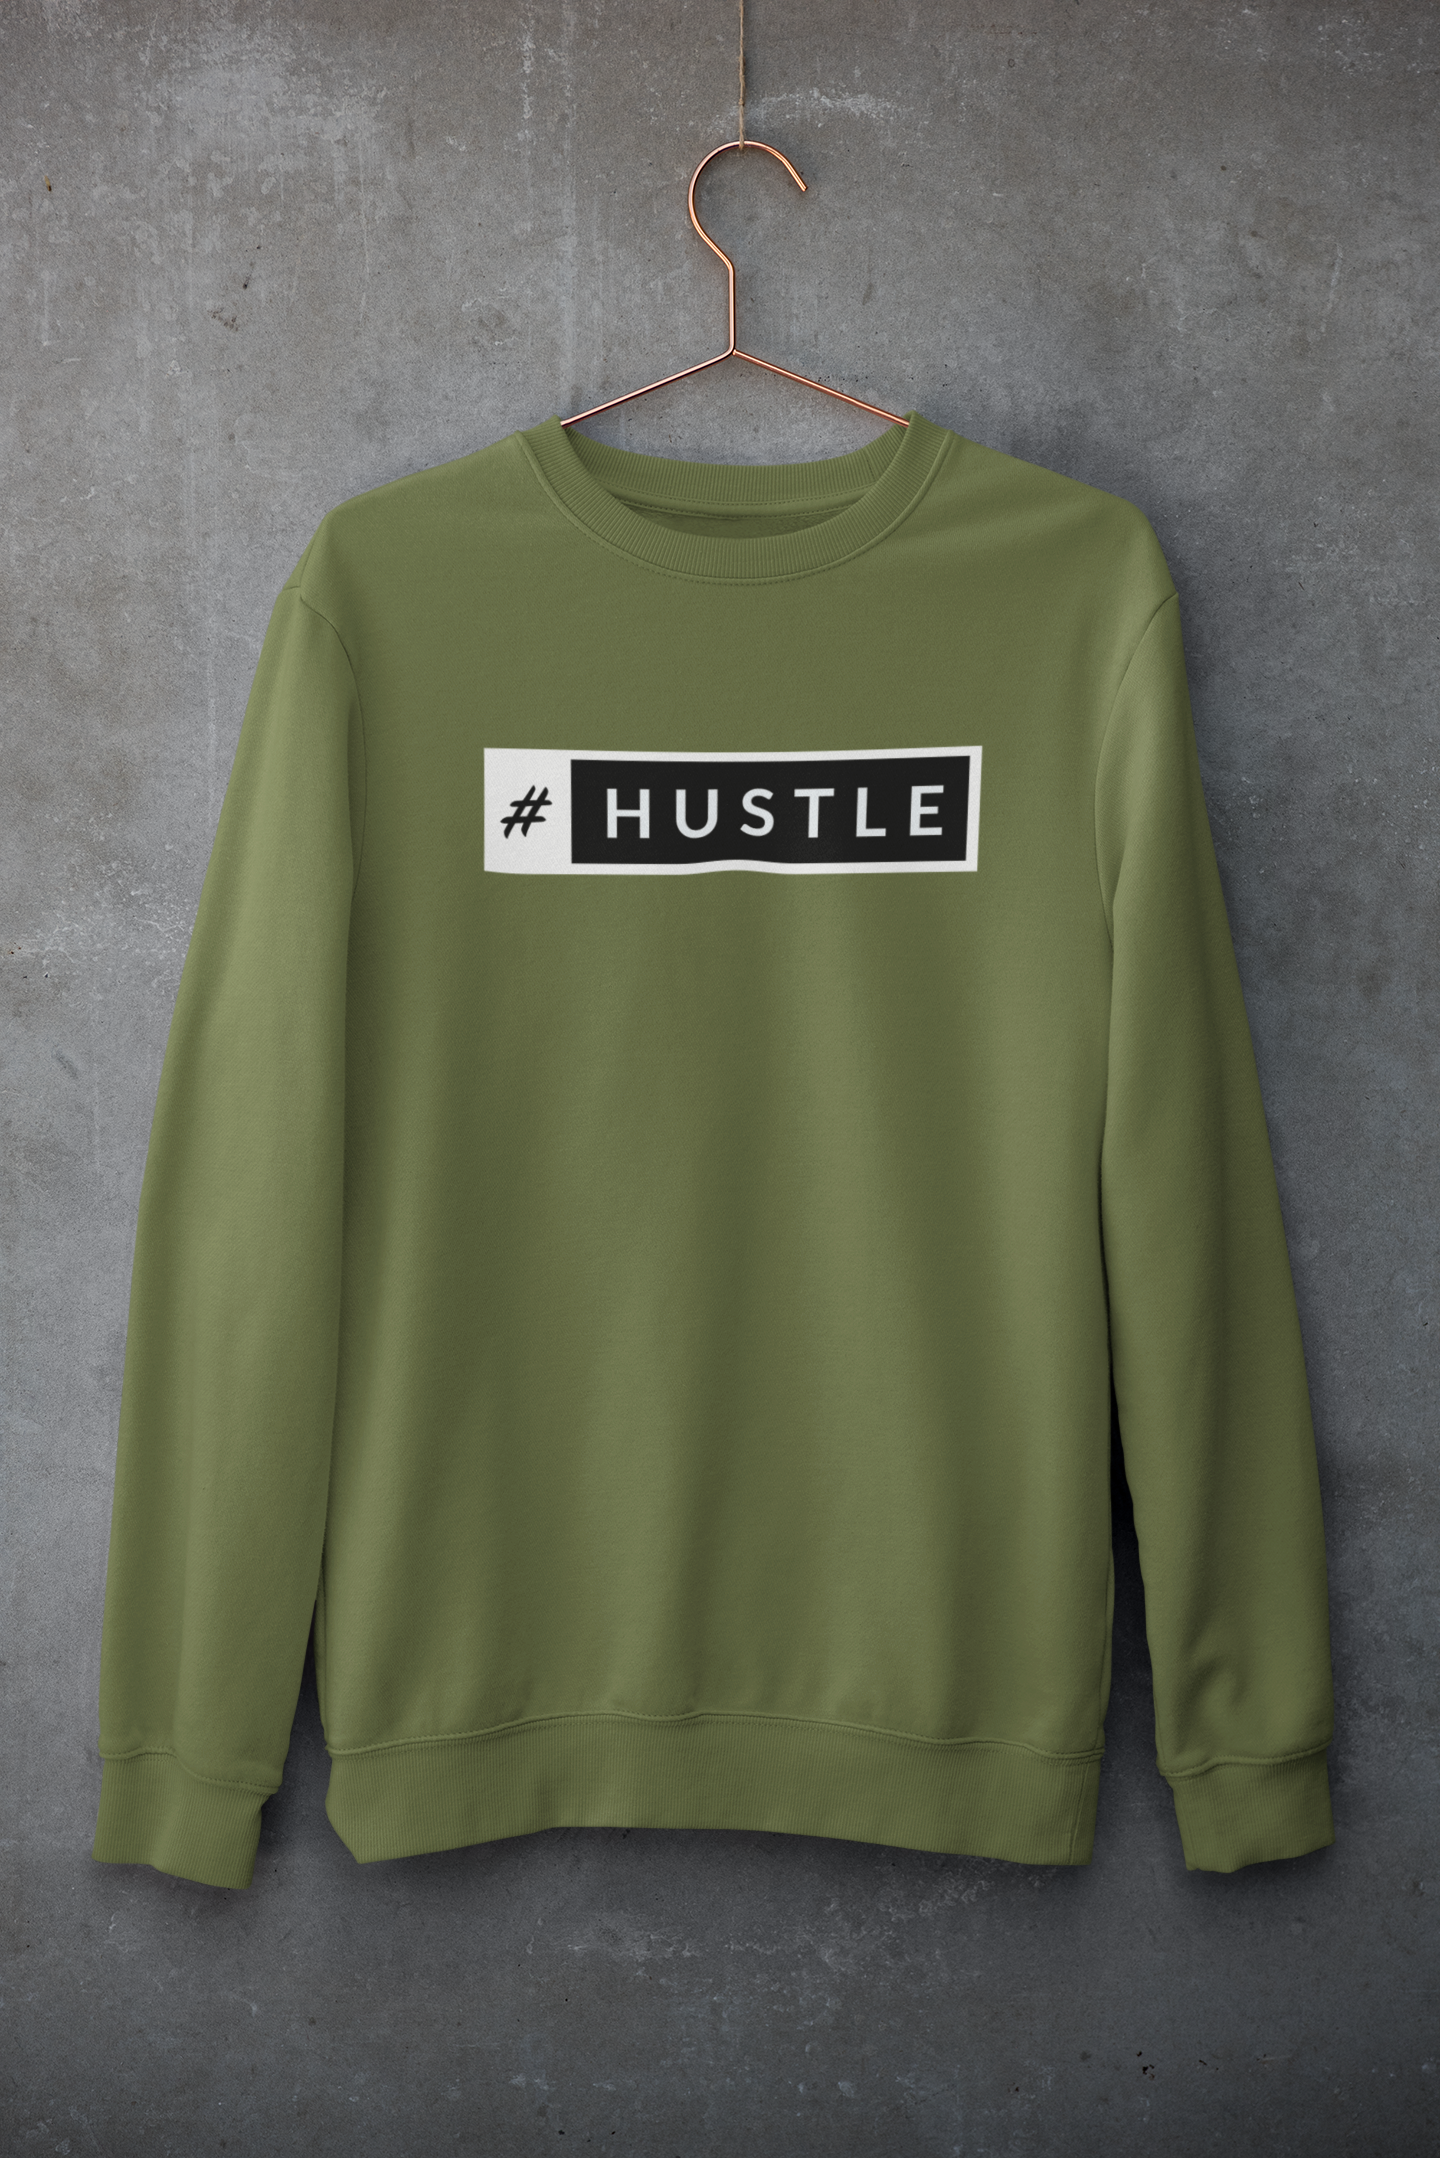 #Hustle - Winter Sweatshirts